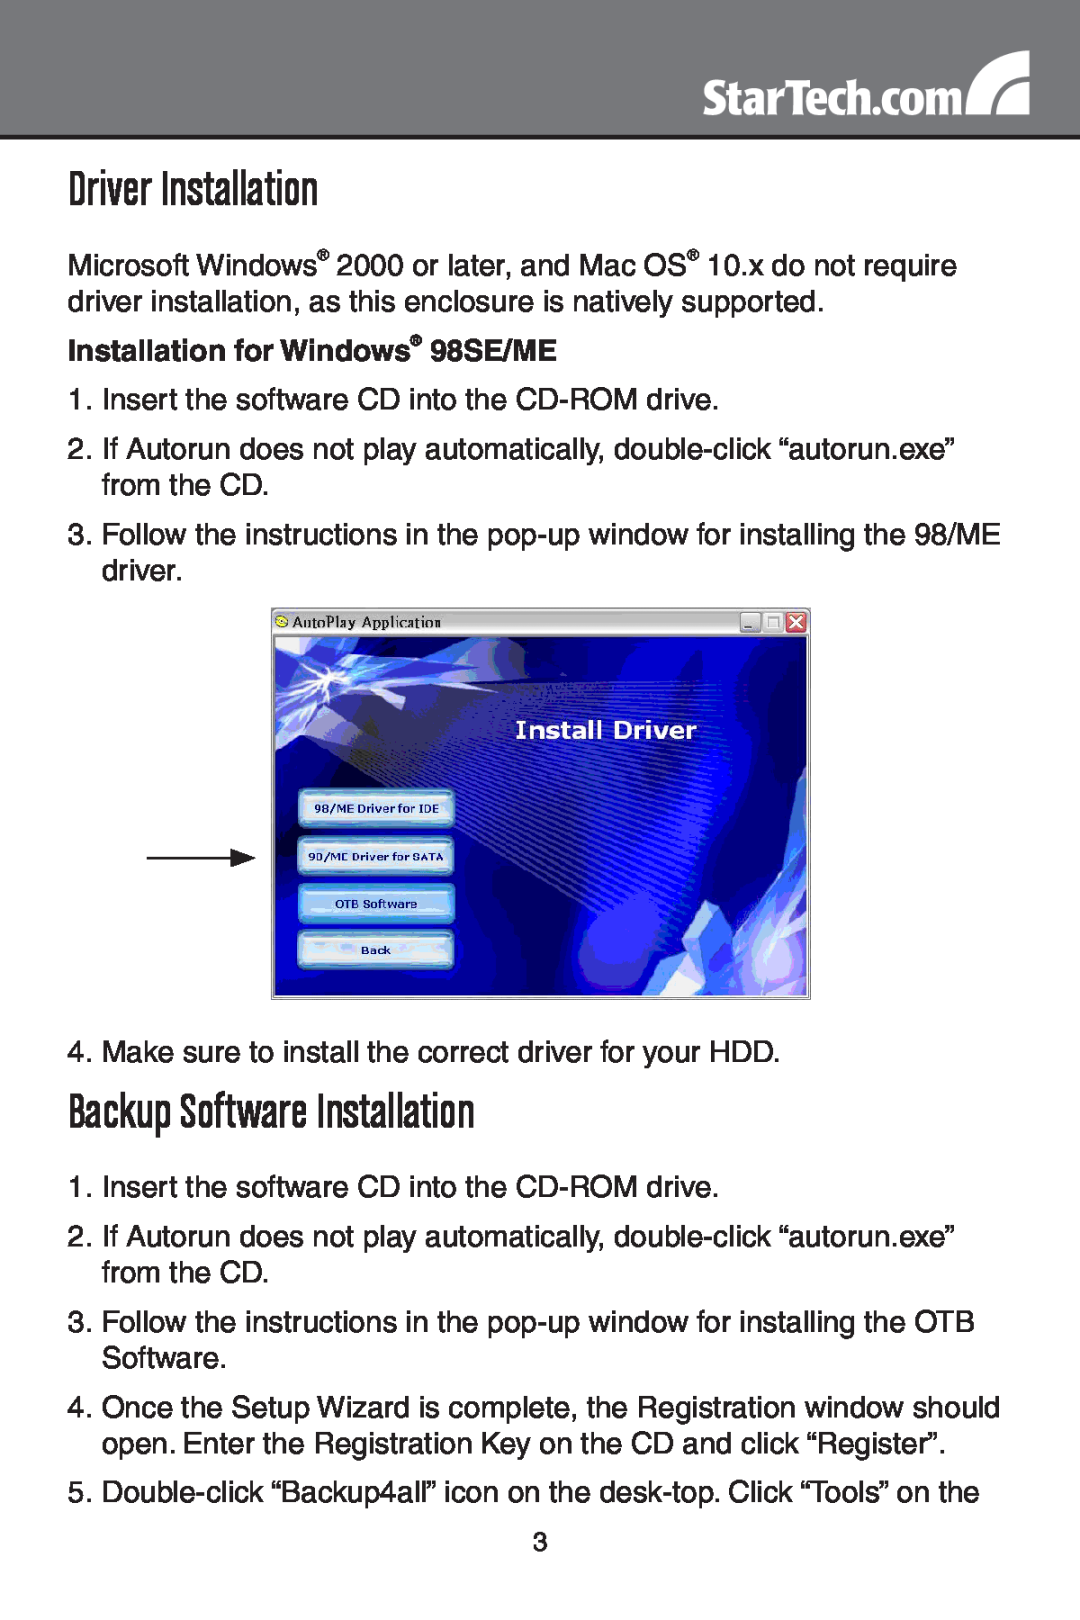 StarTech.com SAT2510BU2B Driver Installation, Backup Software Installation, Installation for Windows 98SE/ME 